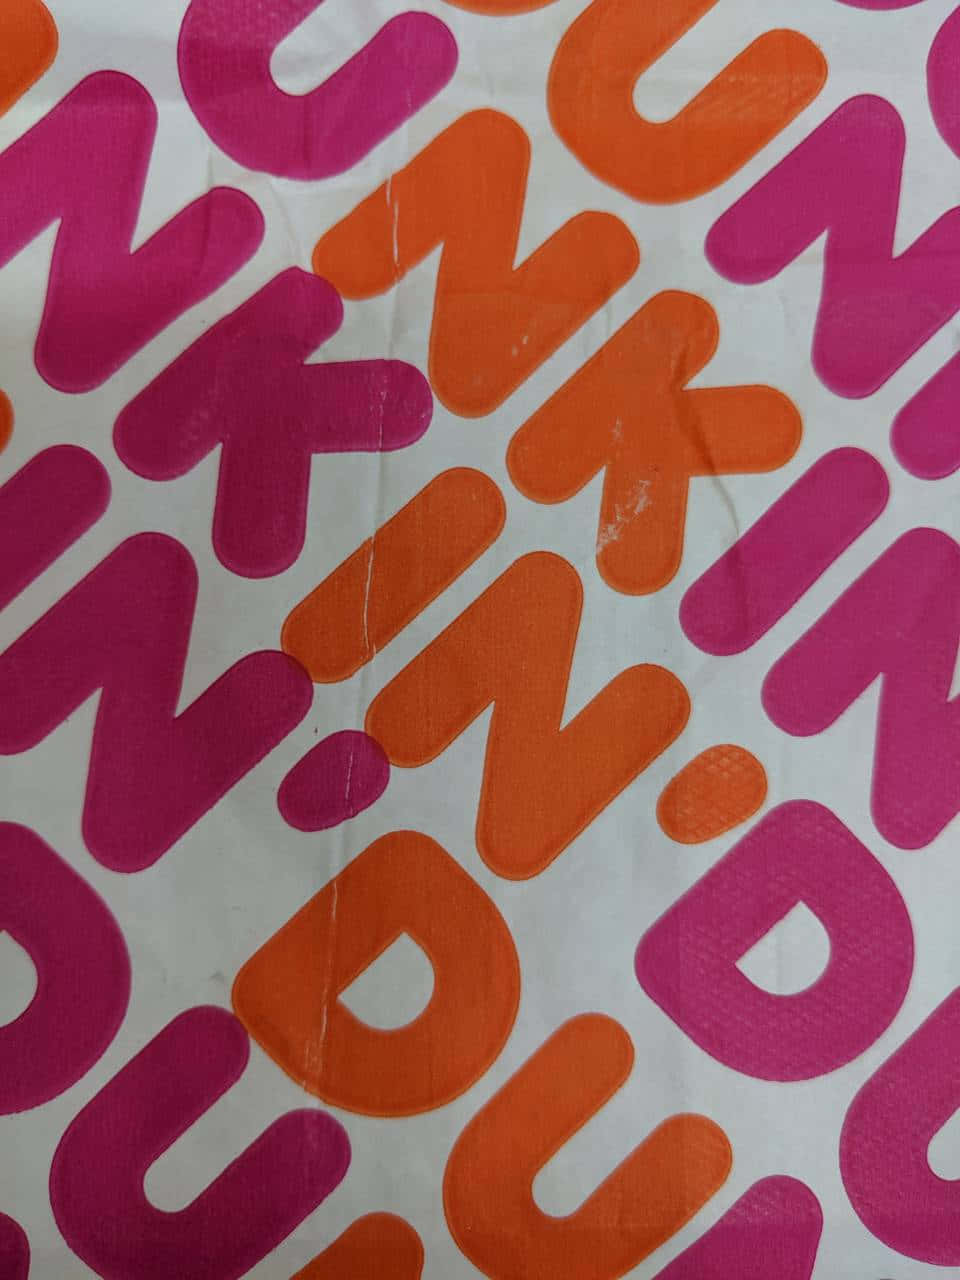 Obténtu Impulso Matutino Sin Sacrificar El Sabor - Dunkin Donuts